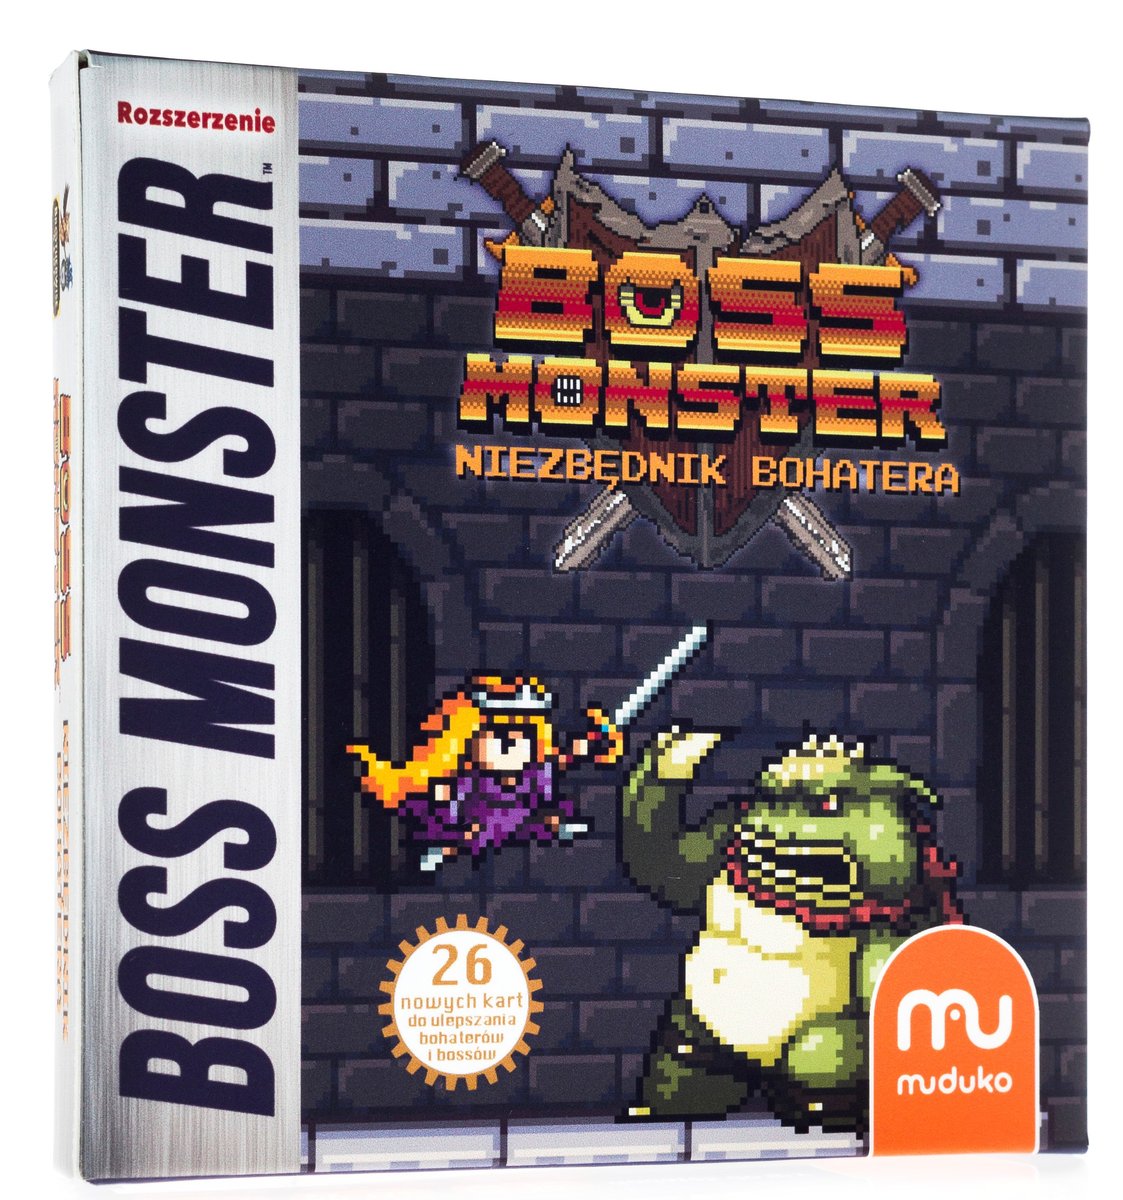 Boss Monster Niezbędnik Bohatera, dodatek do gry, MUDUKO